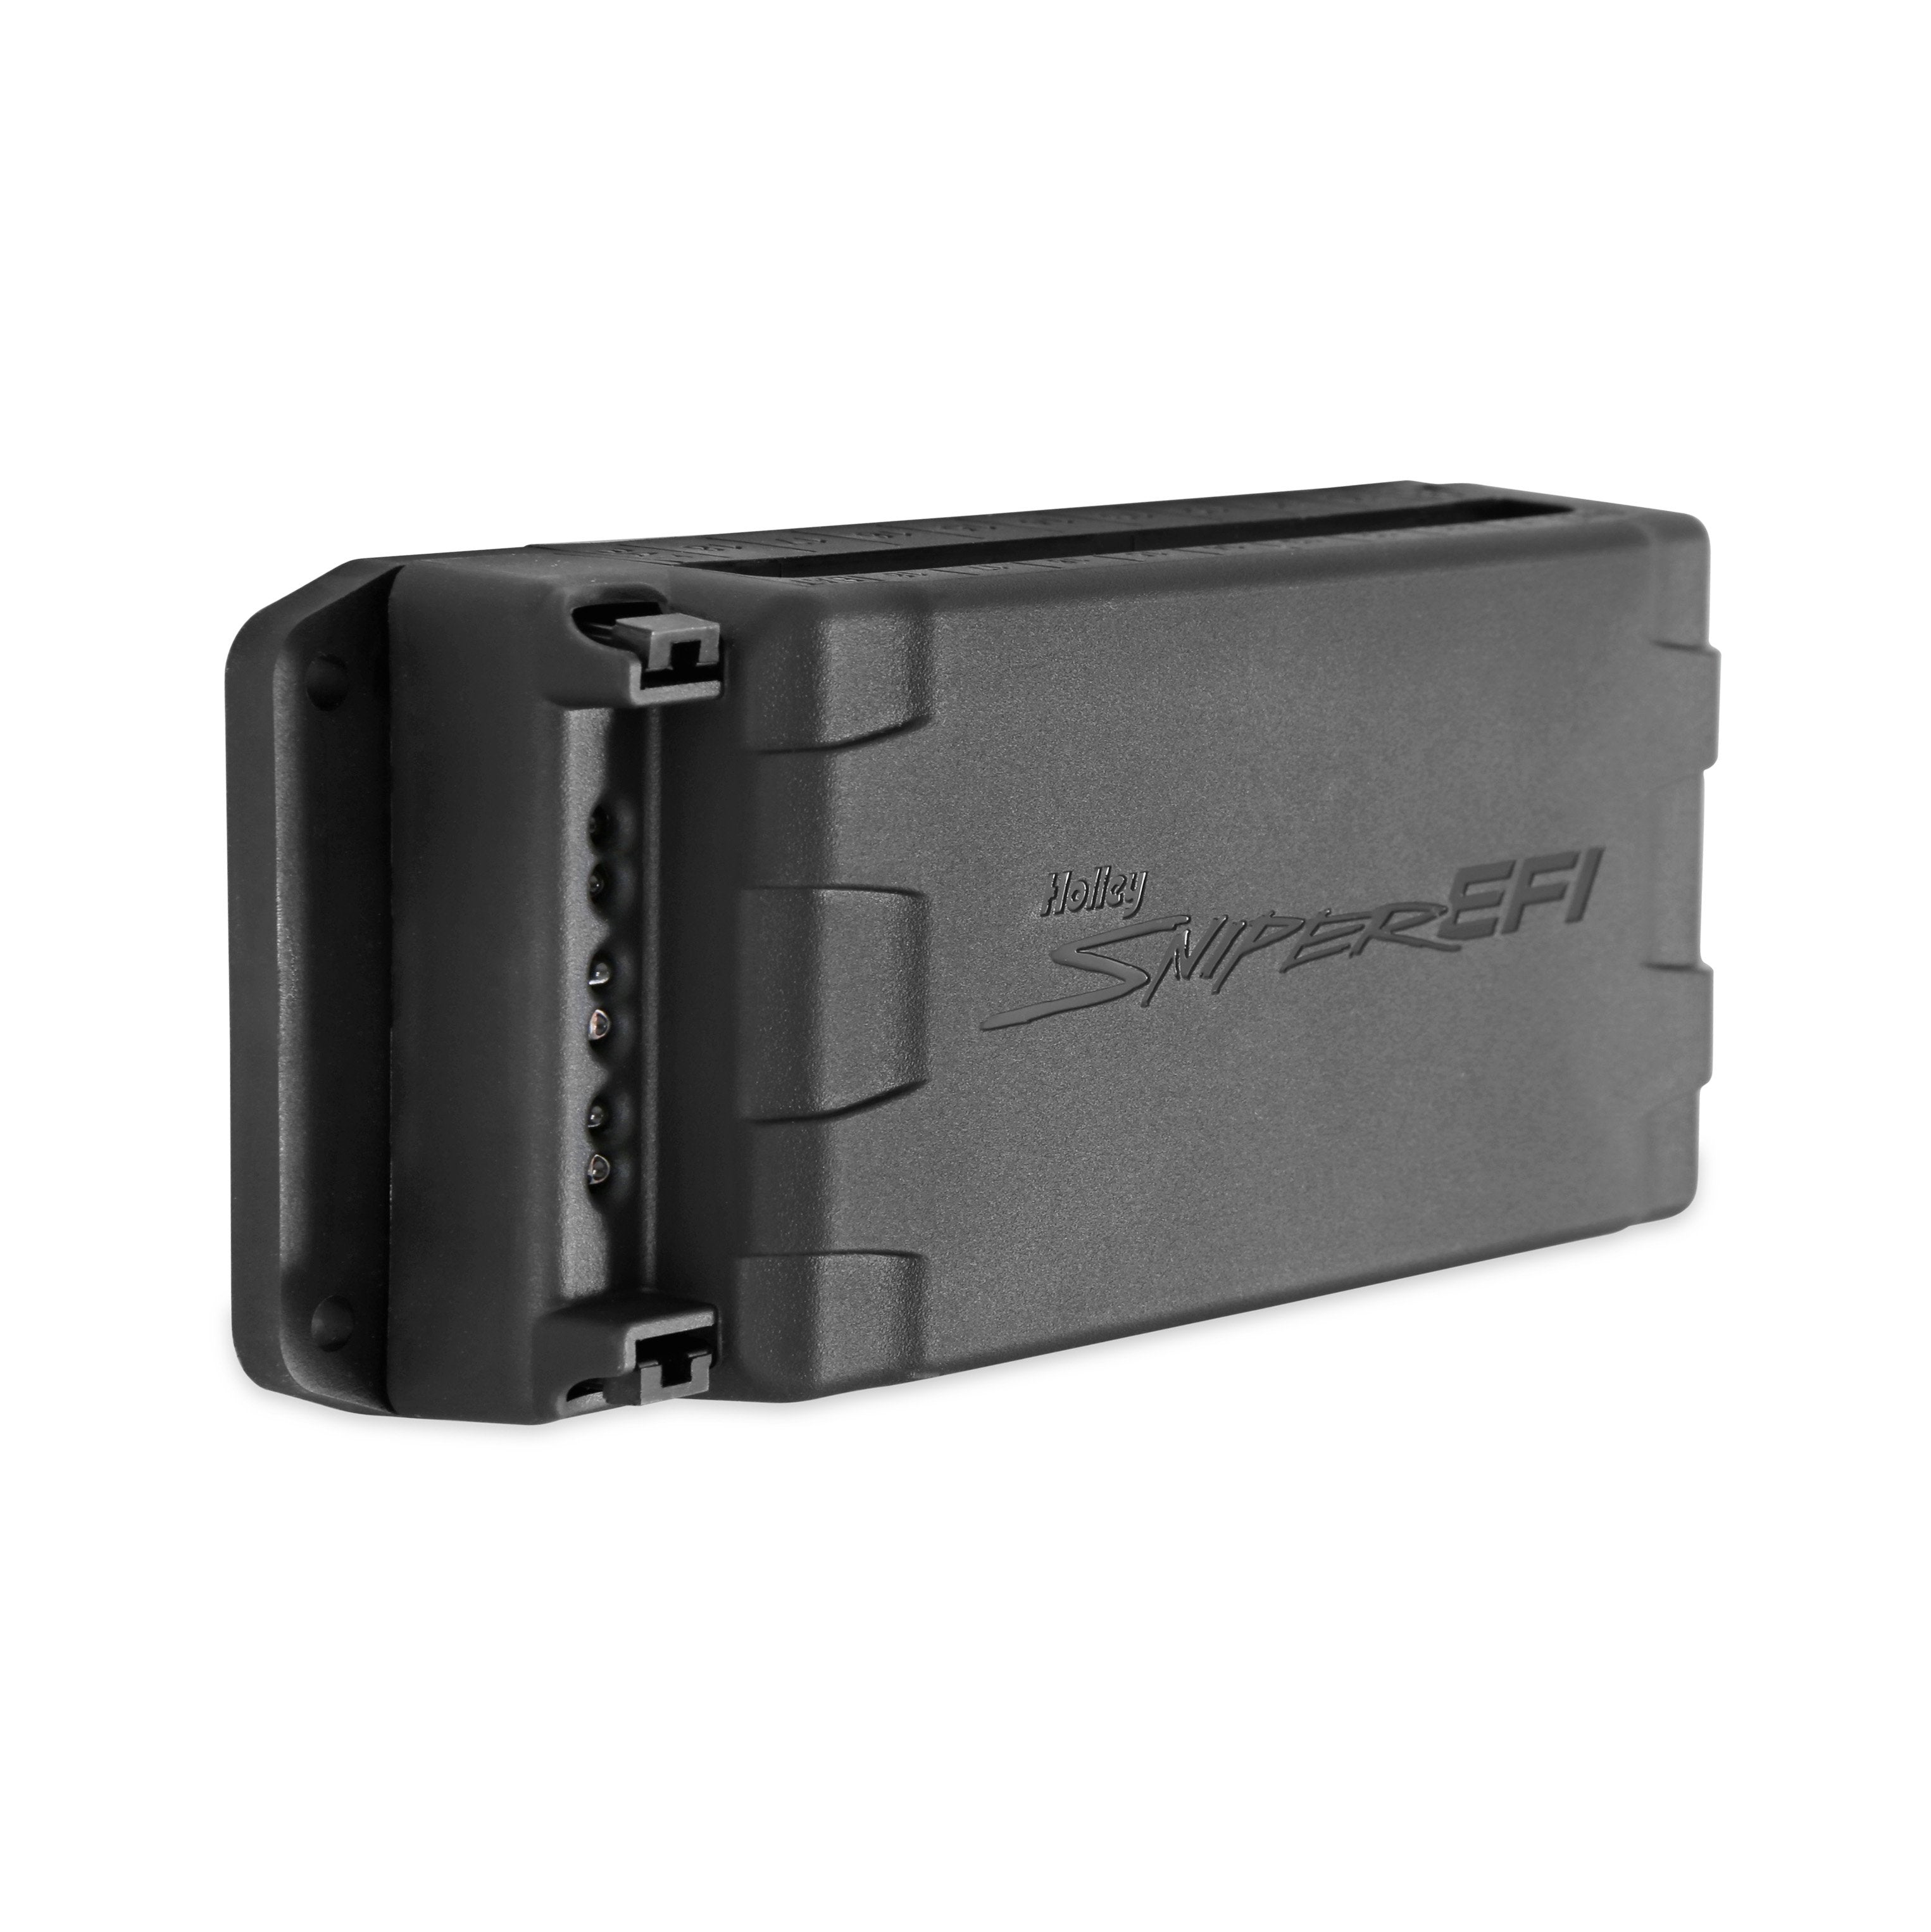 Sniper Motorsports 554-200 SNIPER Power Distribution Module for Sniper 2 EFI Installations